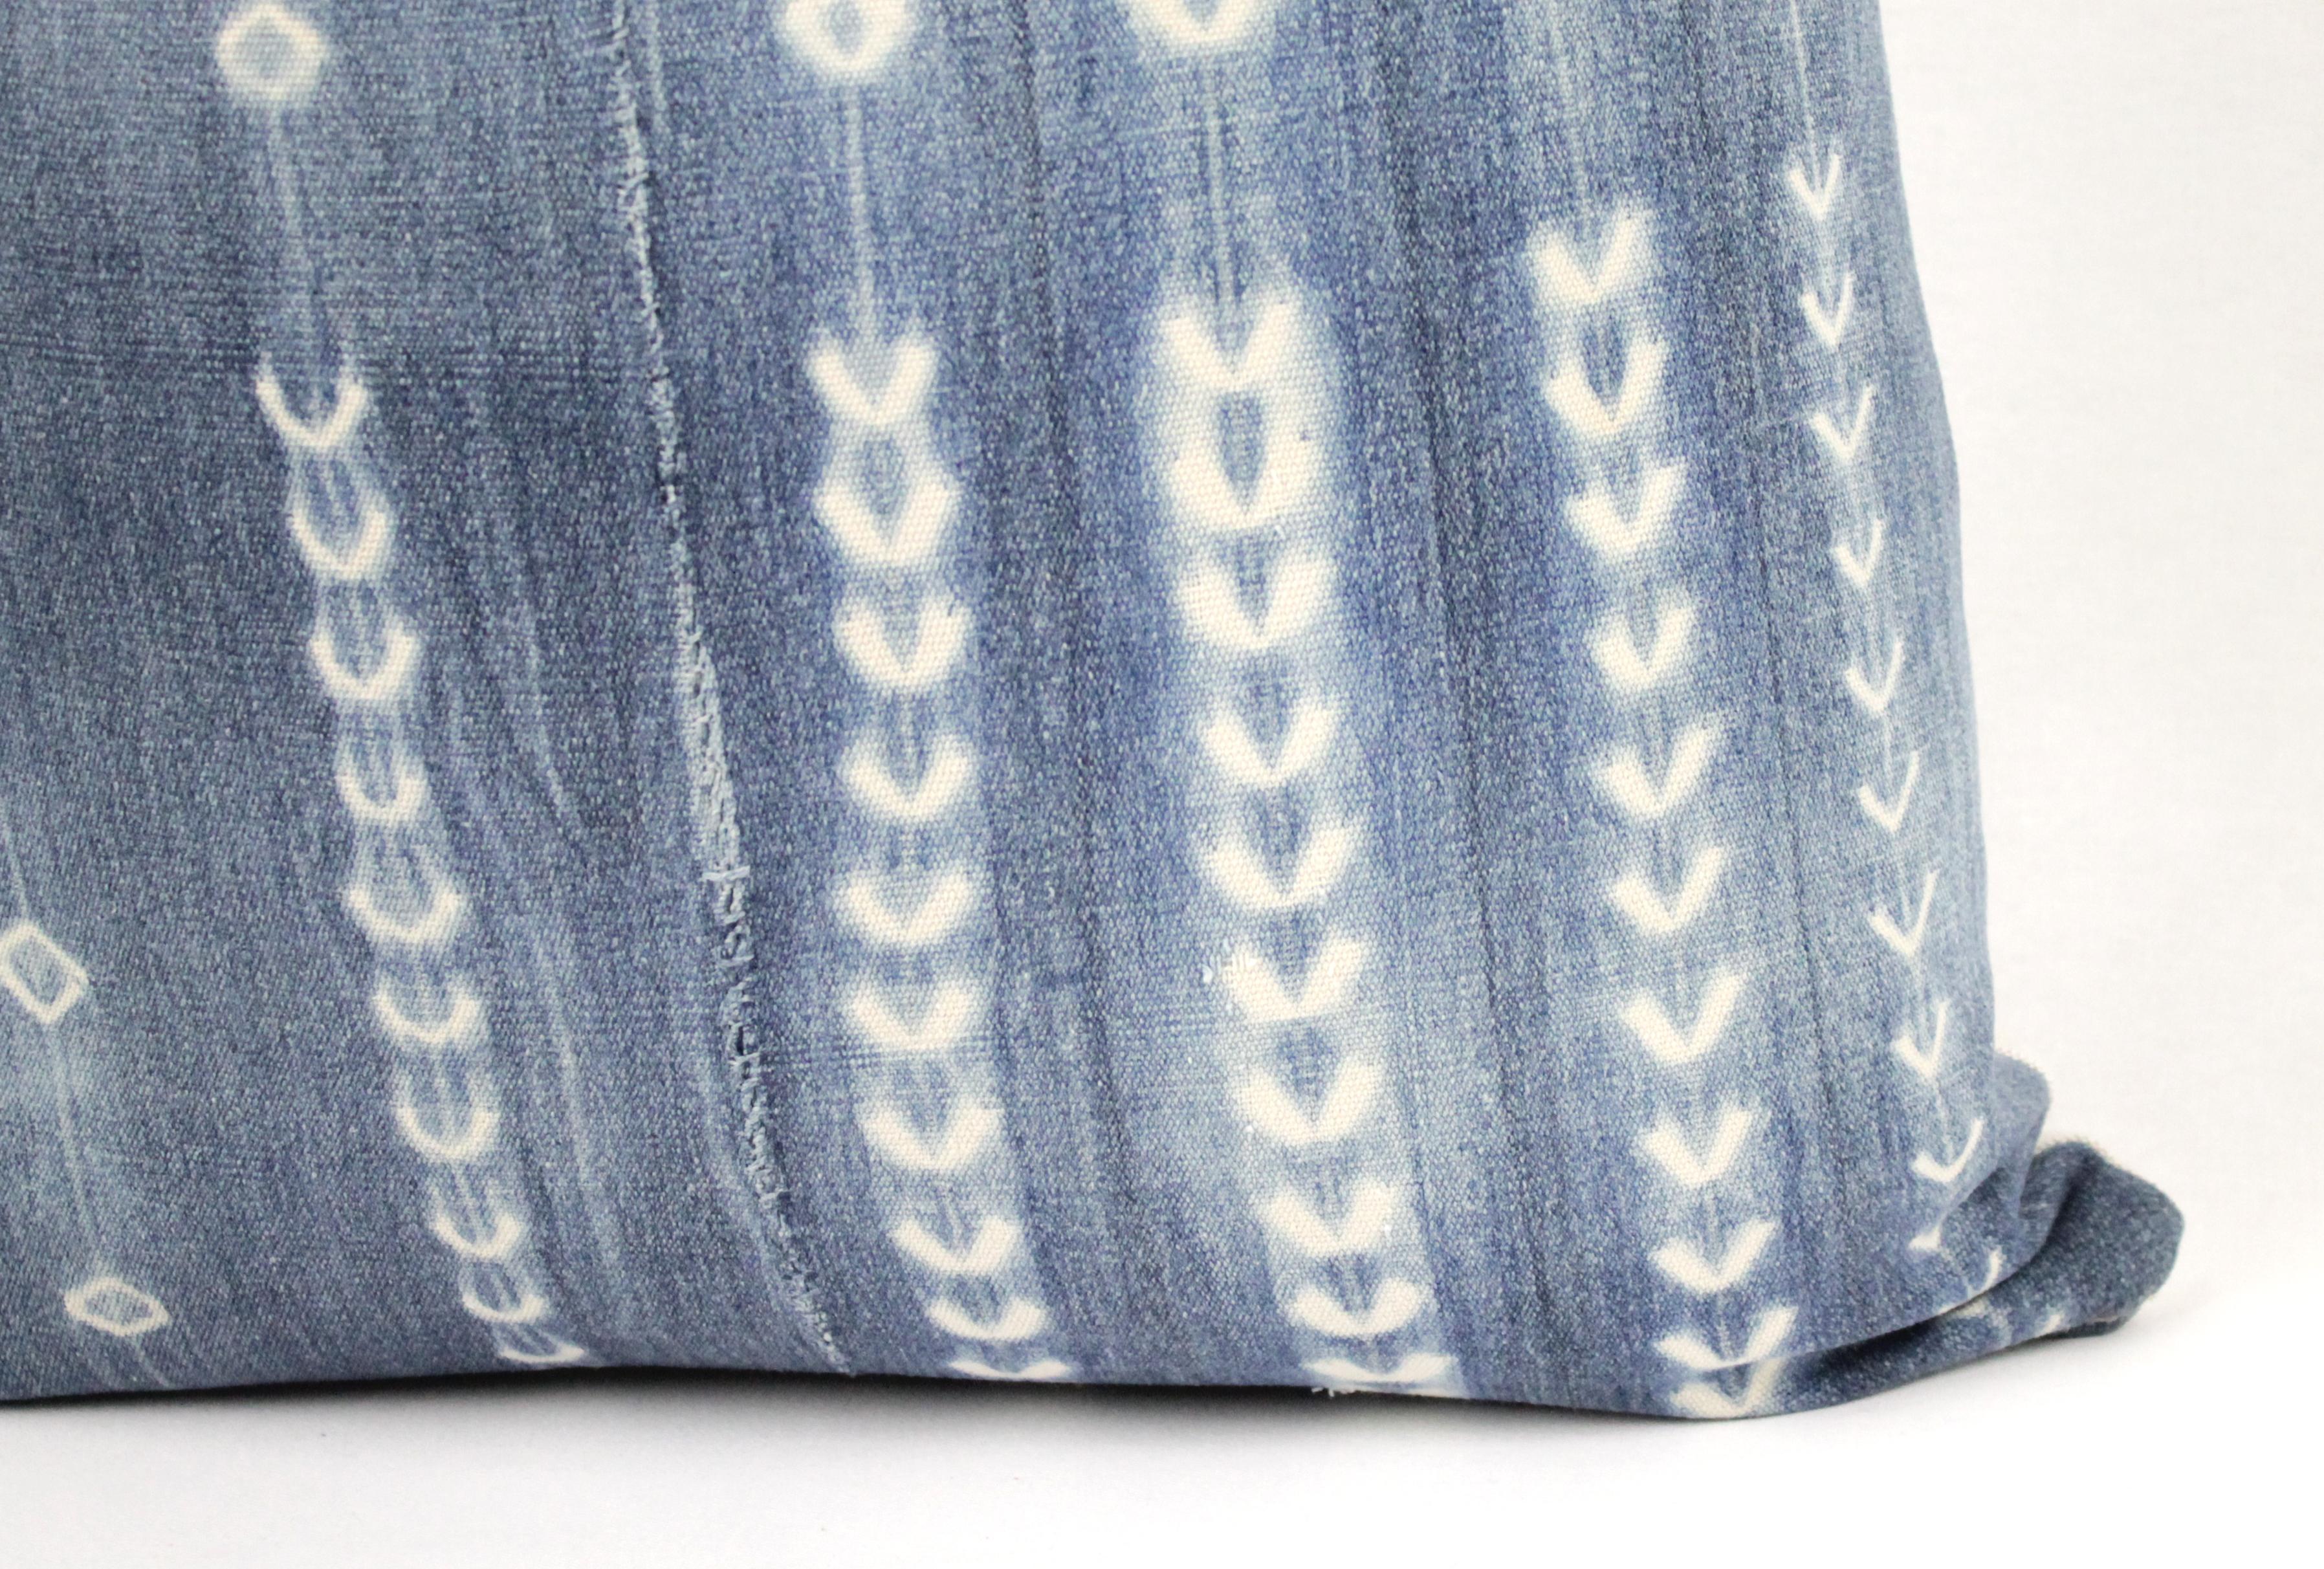 Cotton Vintage Blue and White Batik Style Pillows